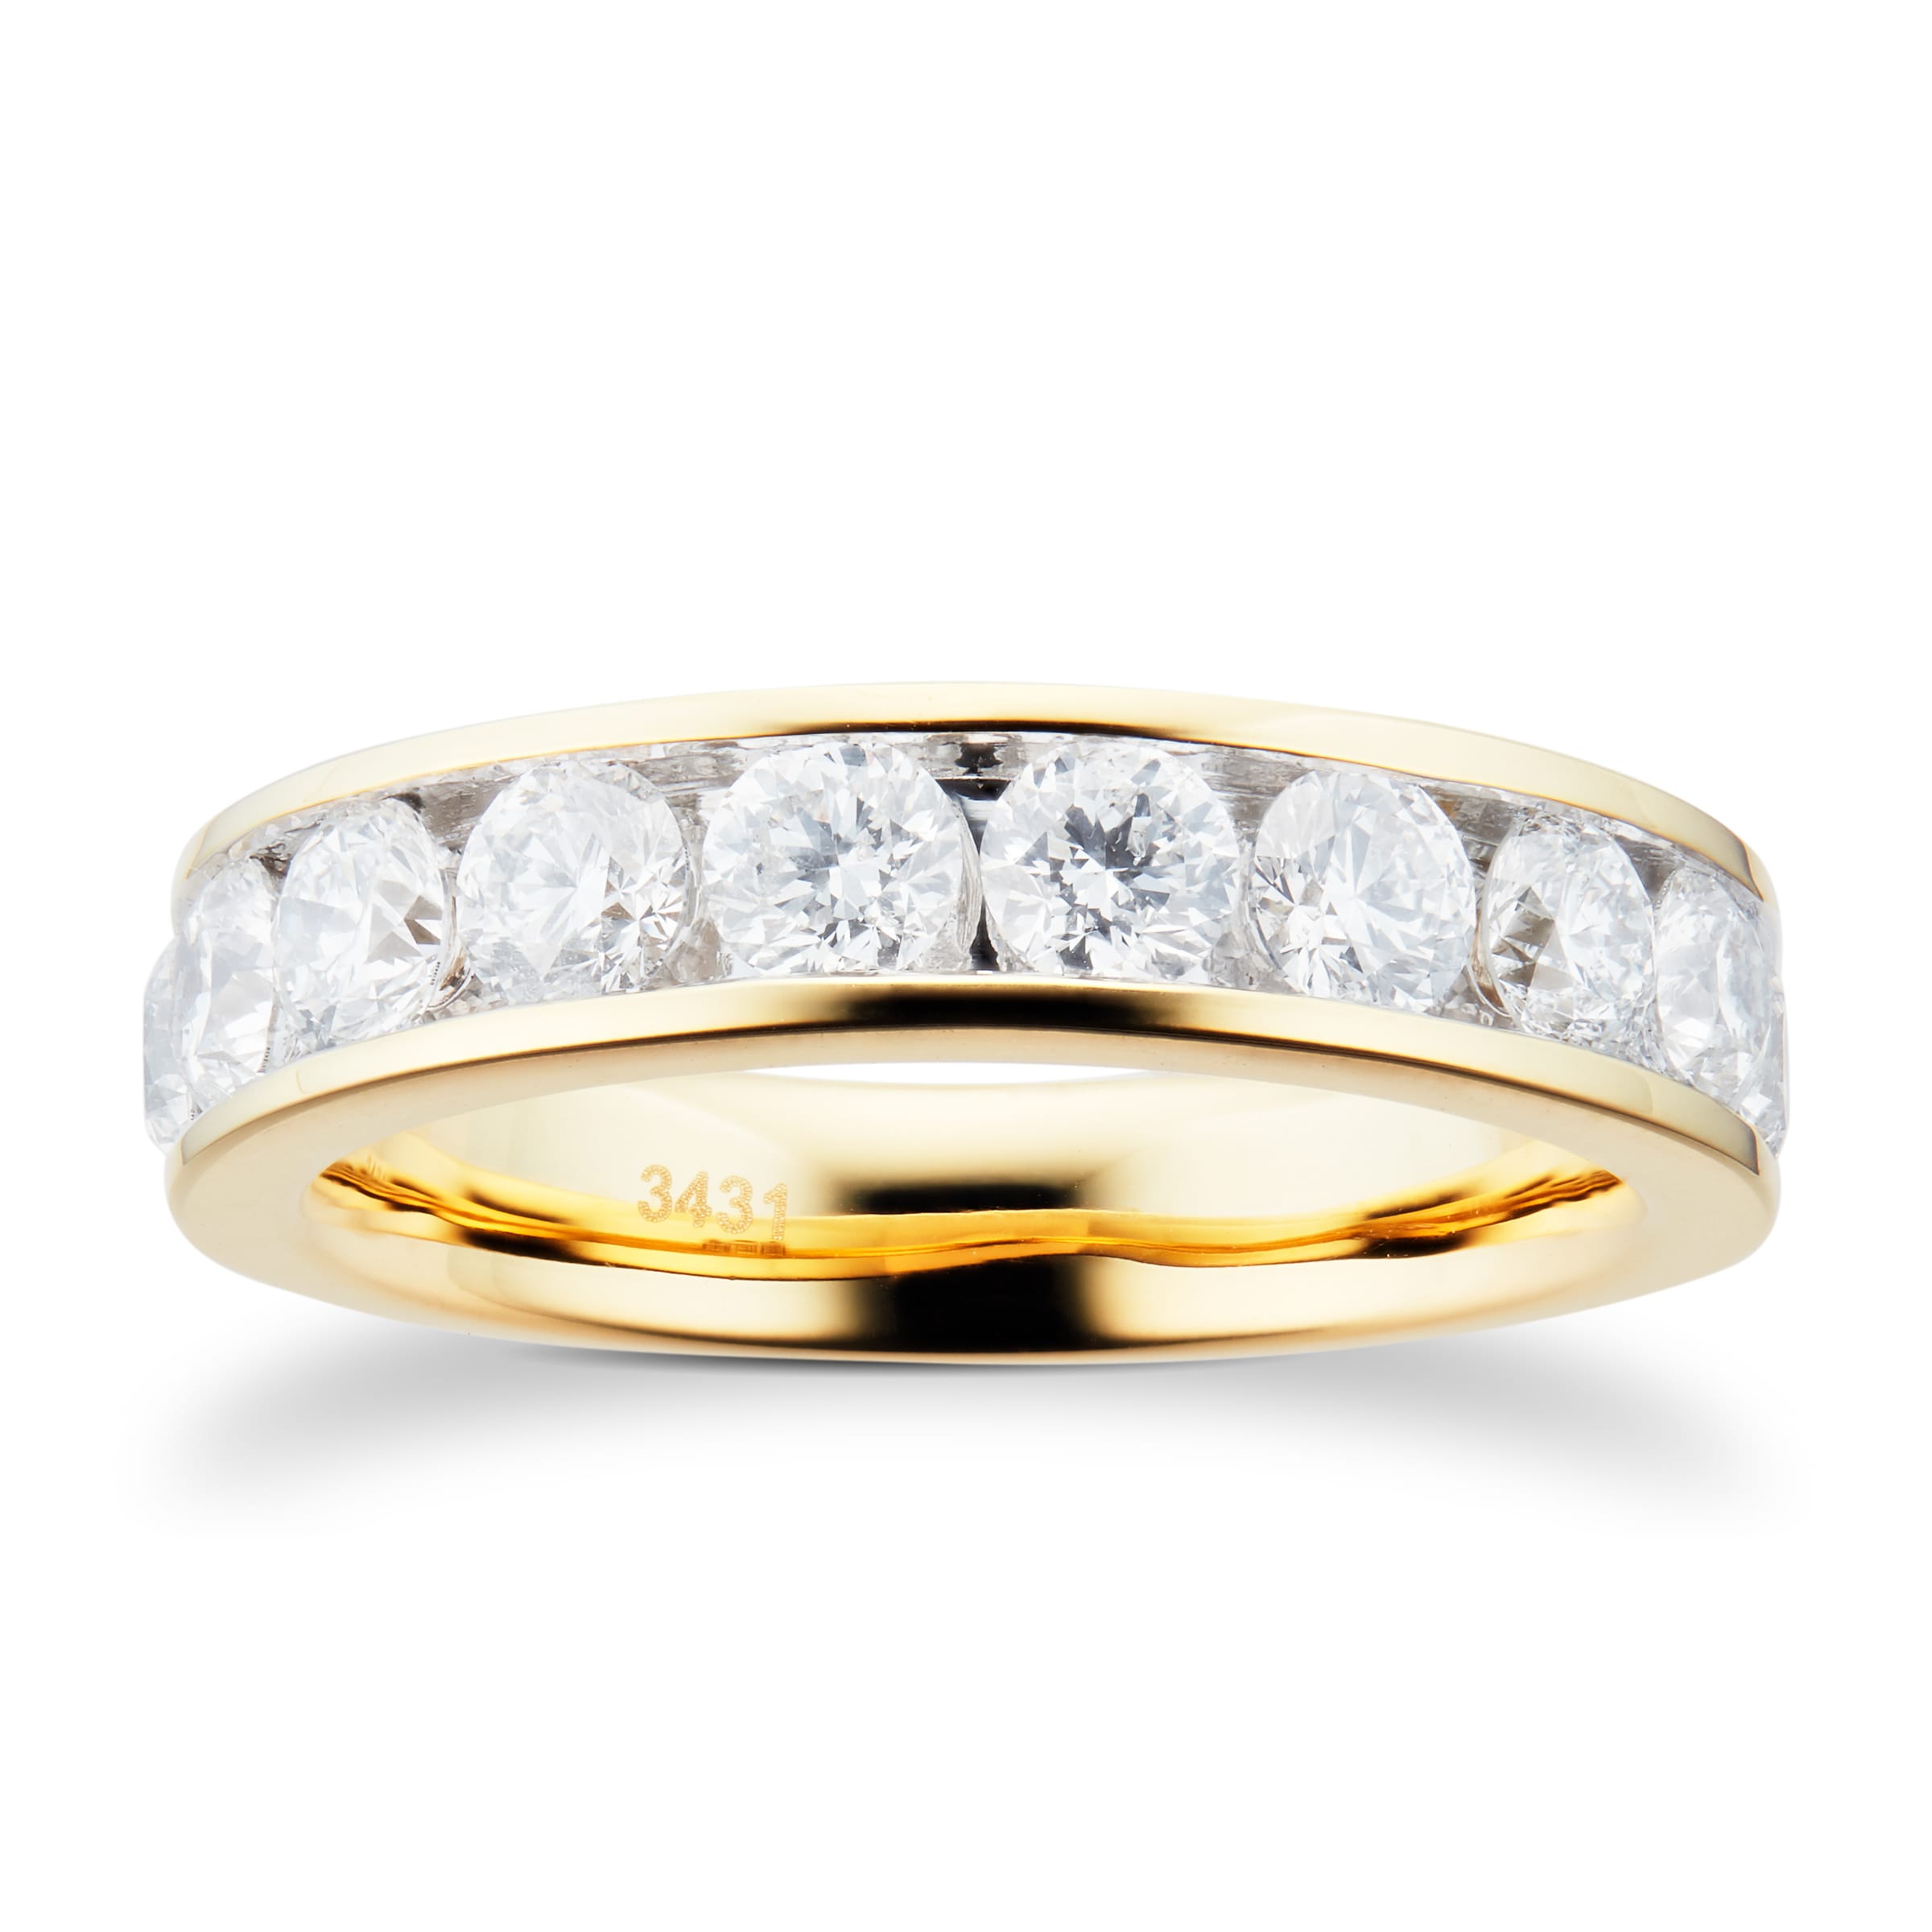 18ct Yellow Gold 1.50ct Brilliant Cut Goldsmiths Brightest Diamond Eternity Ring - Ring Size K